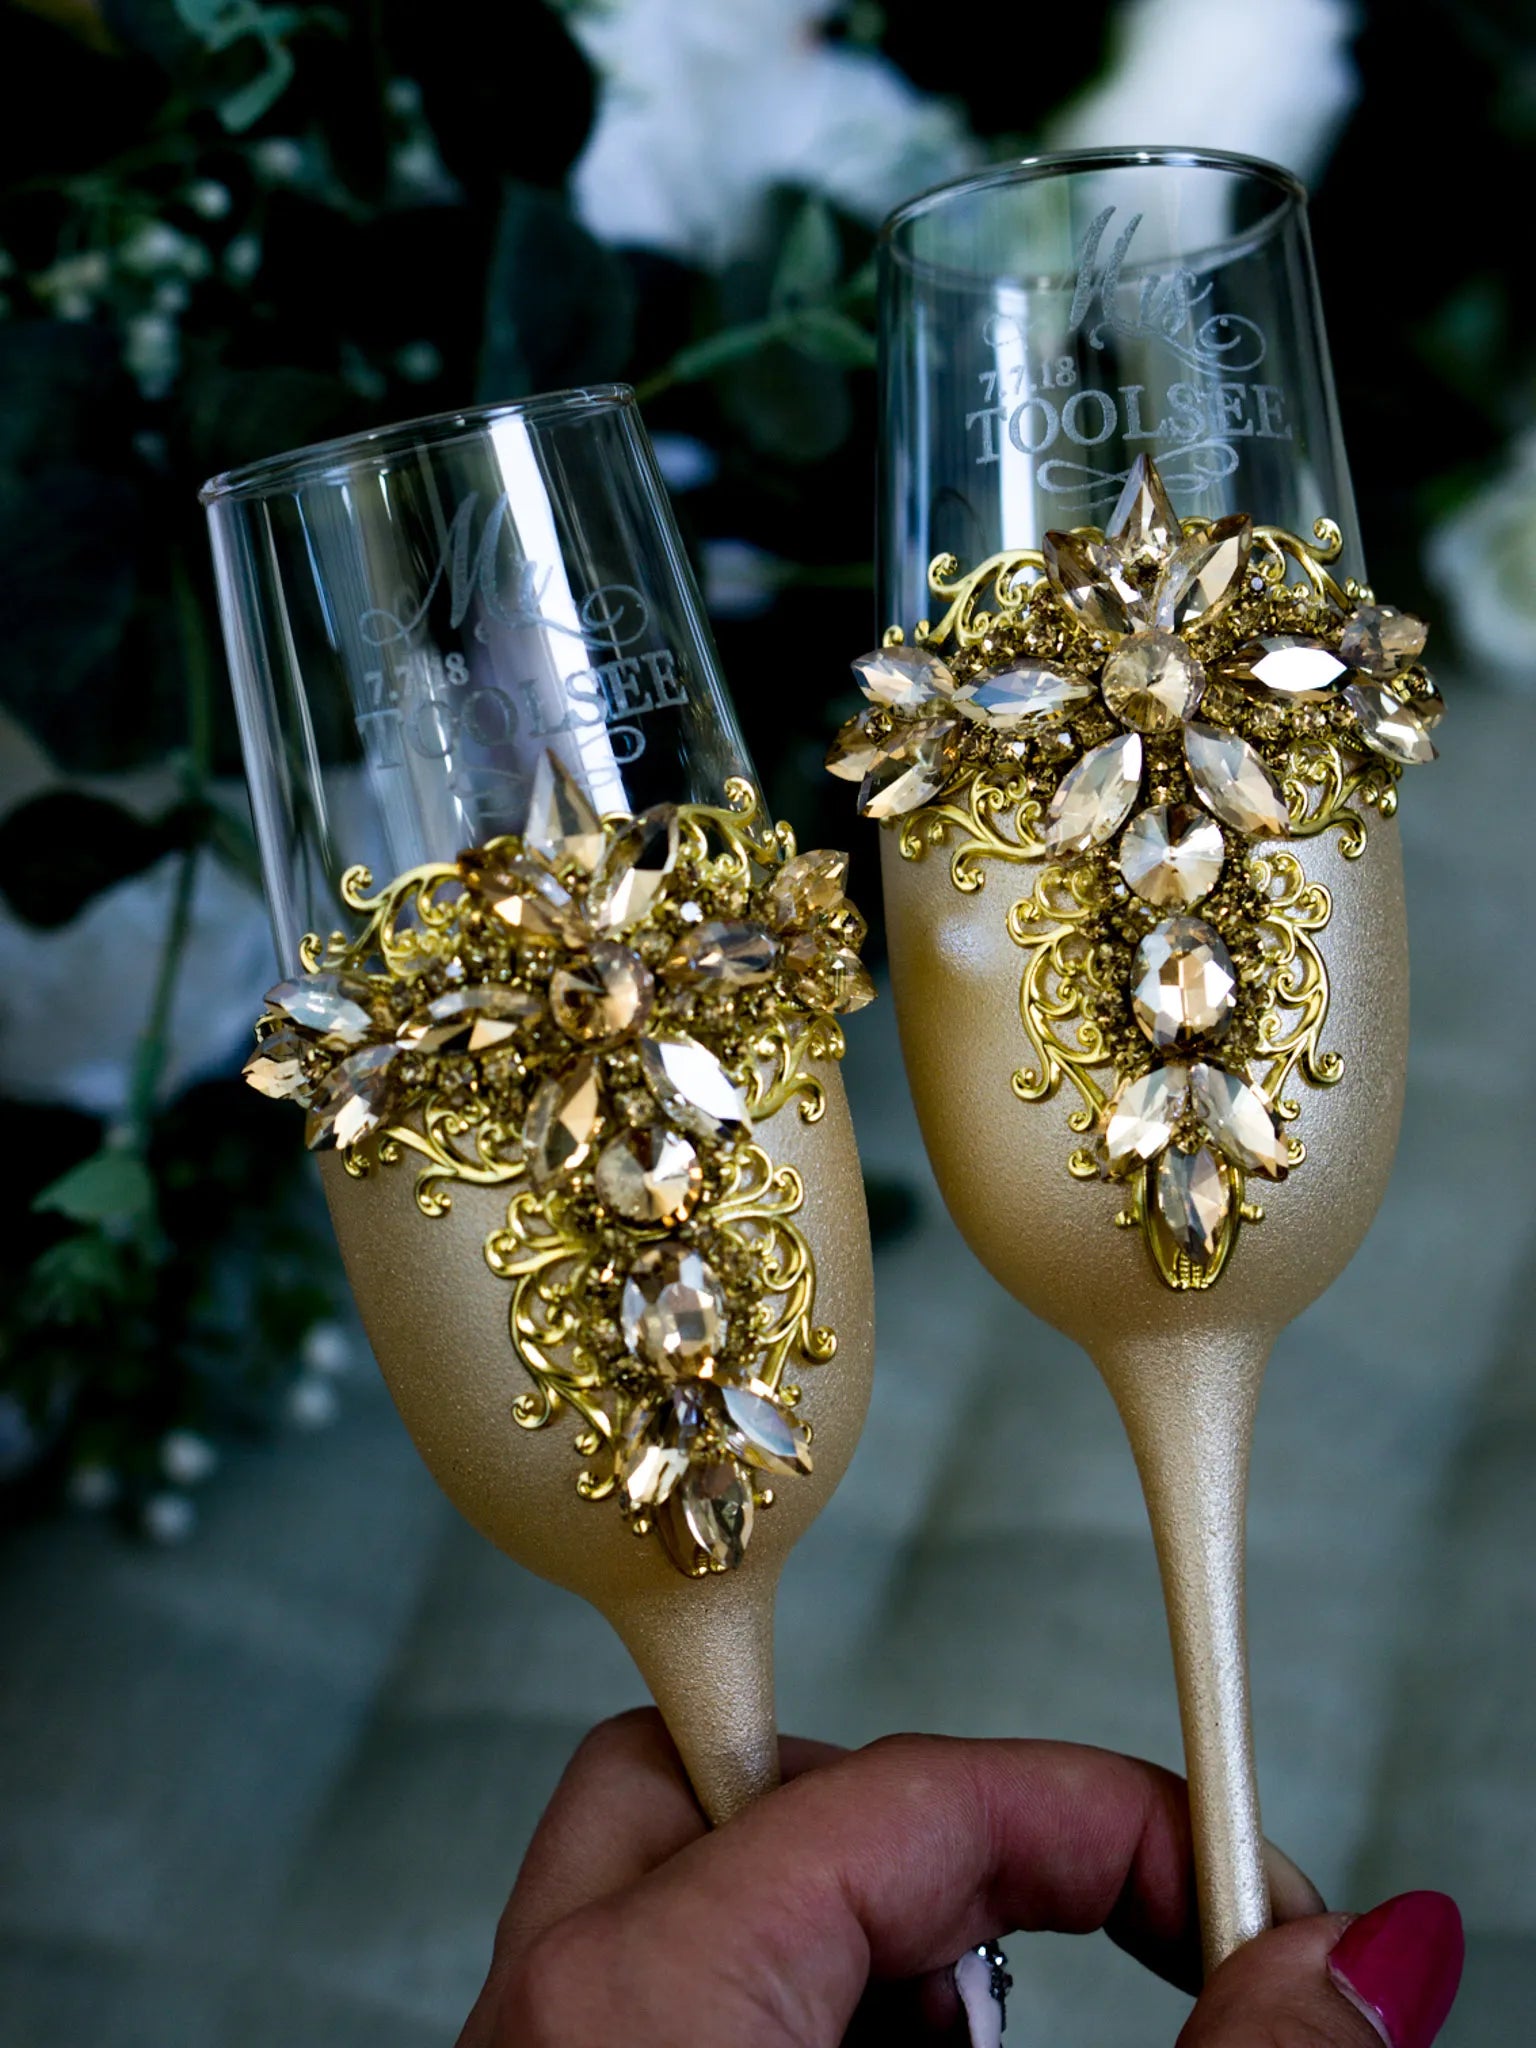 Filigree-designed champagne glasses